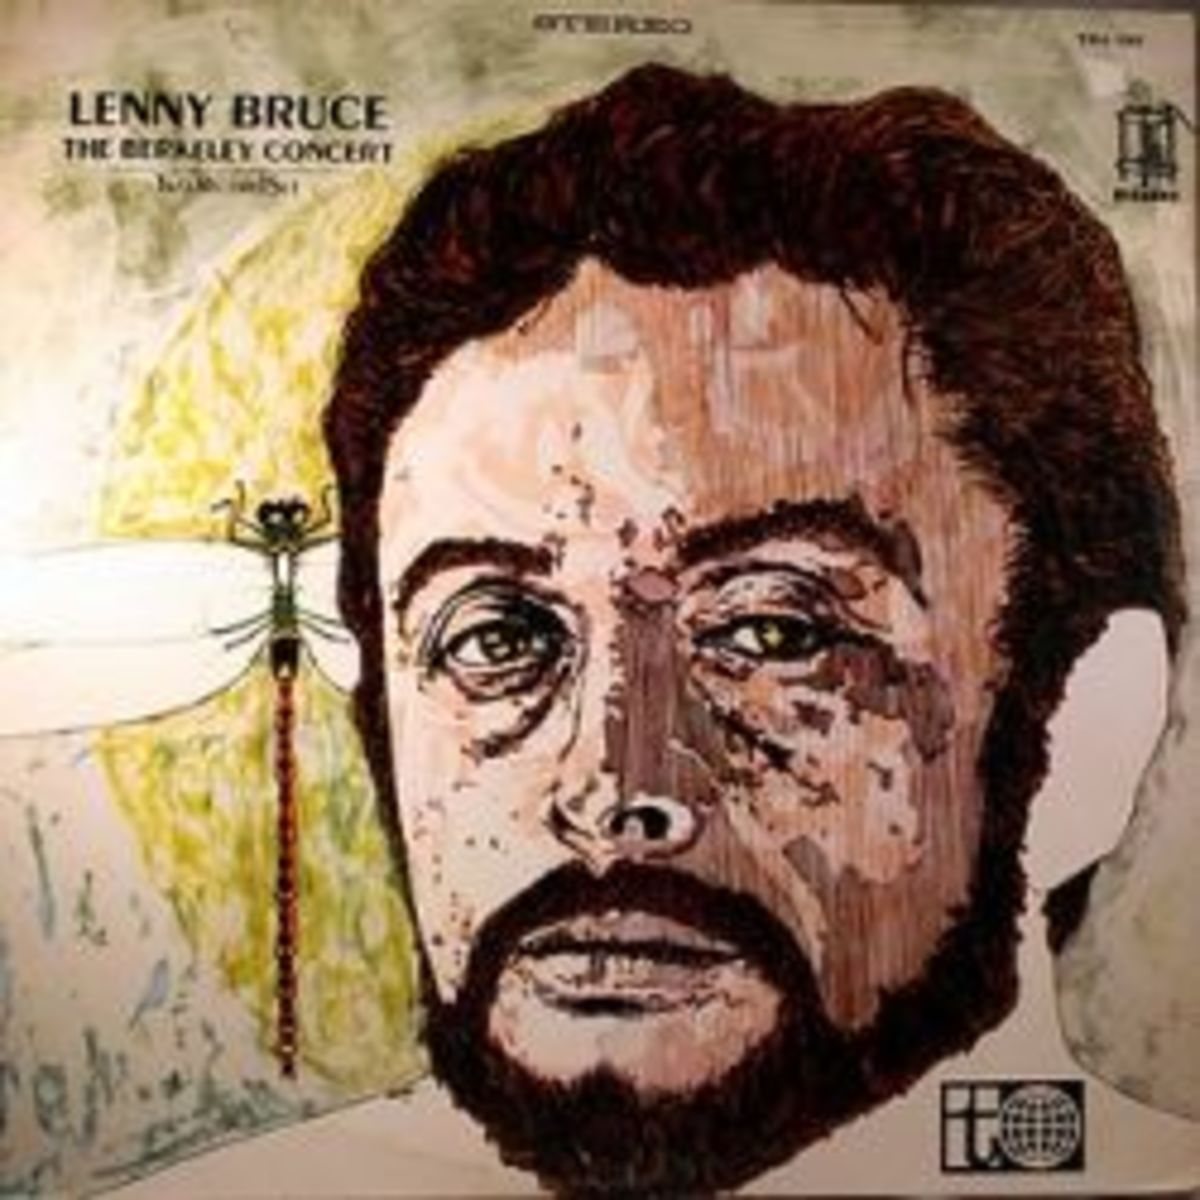 Lenny Bruce The Berkeley Concert Bizarre Records 2XS 6329 12" LP Record Album 